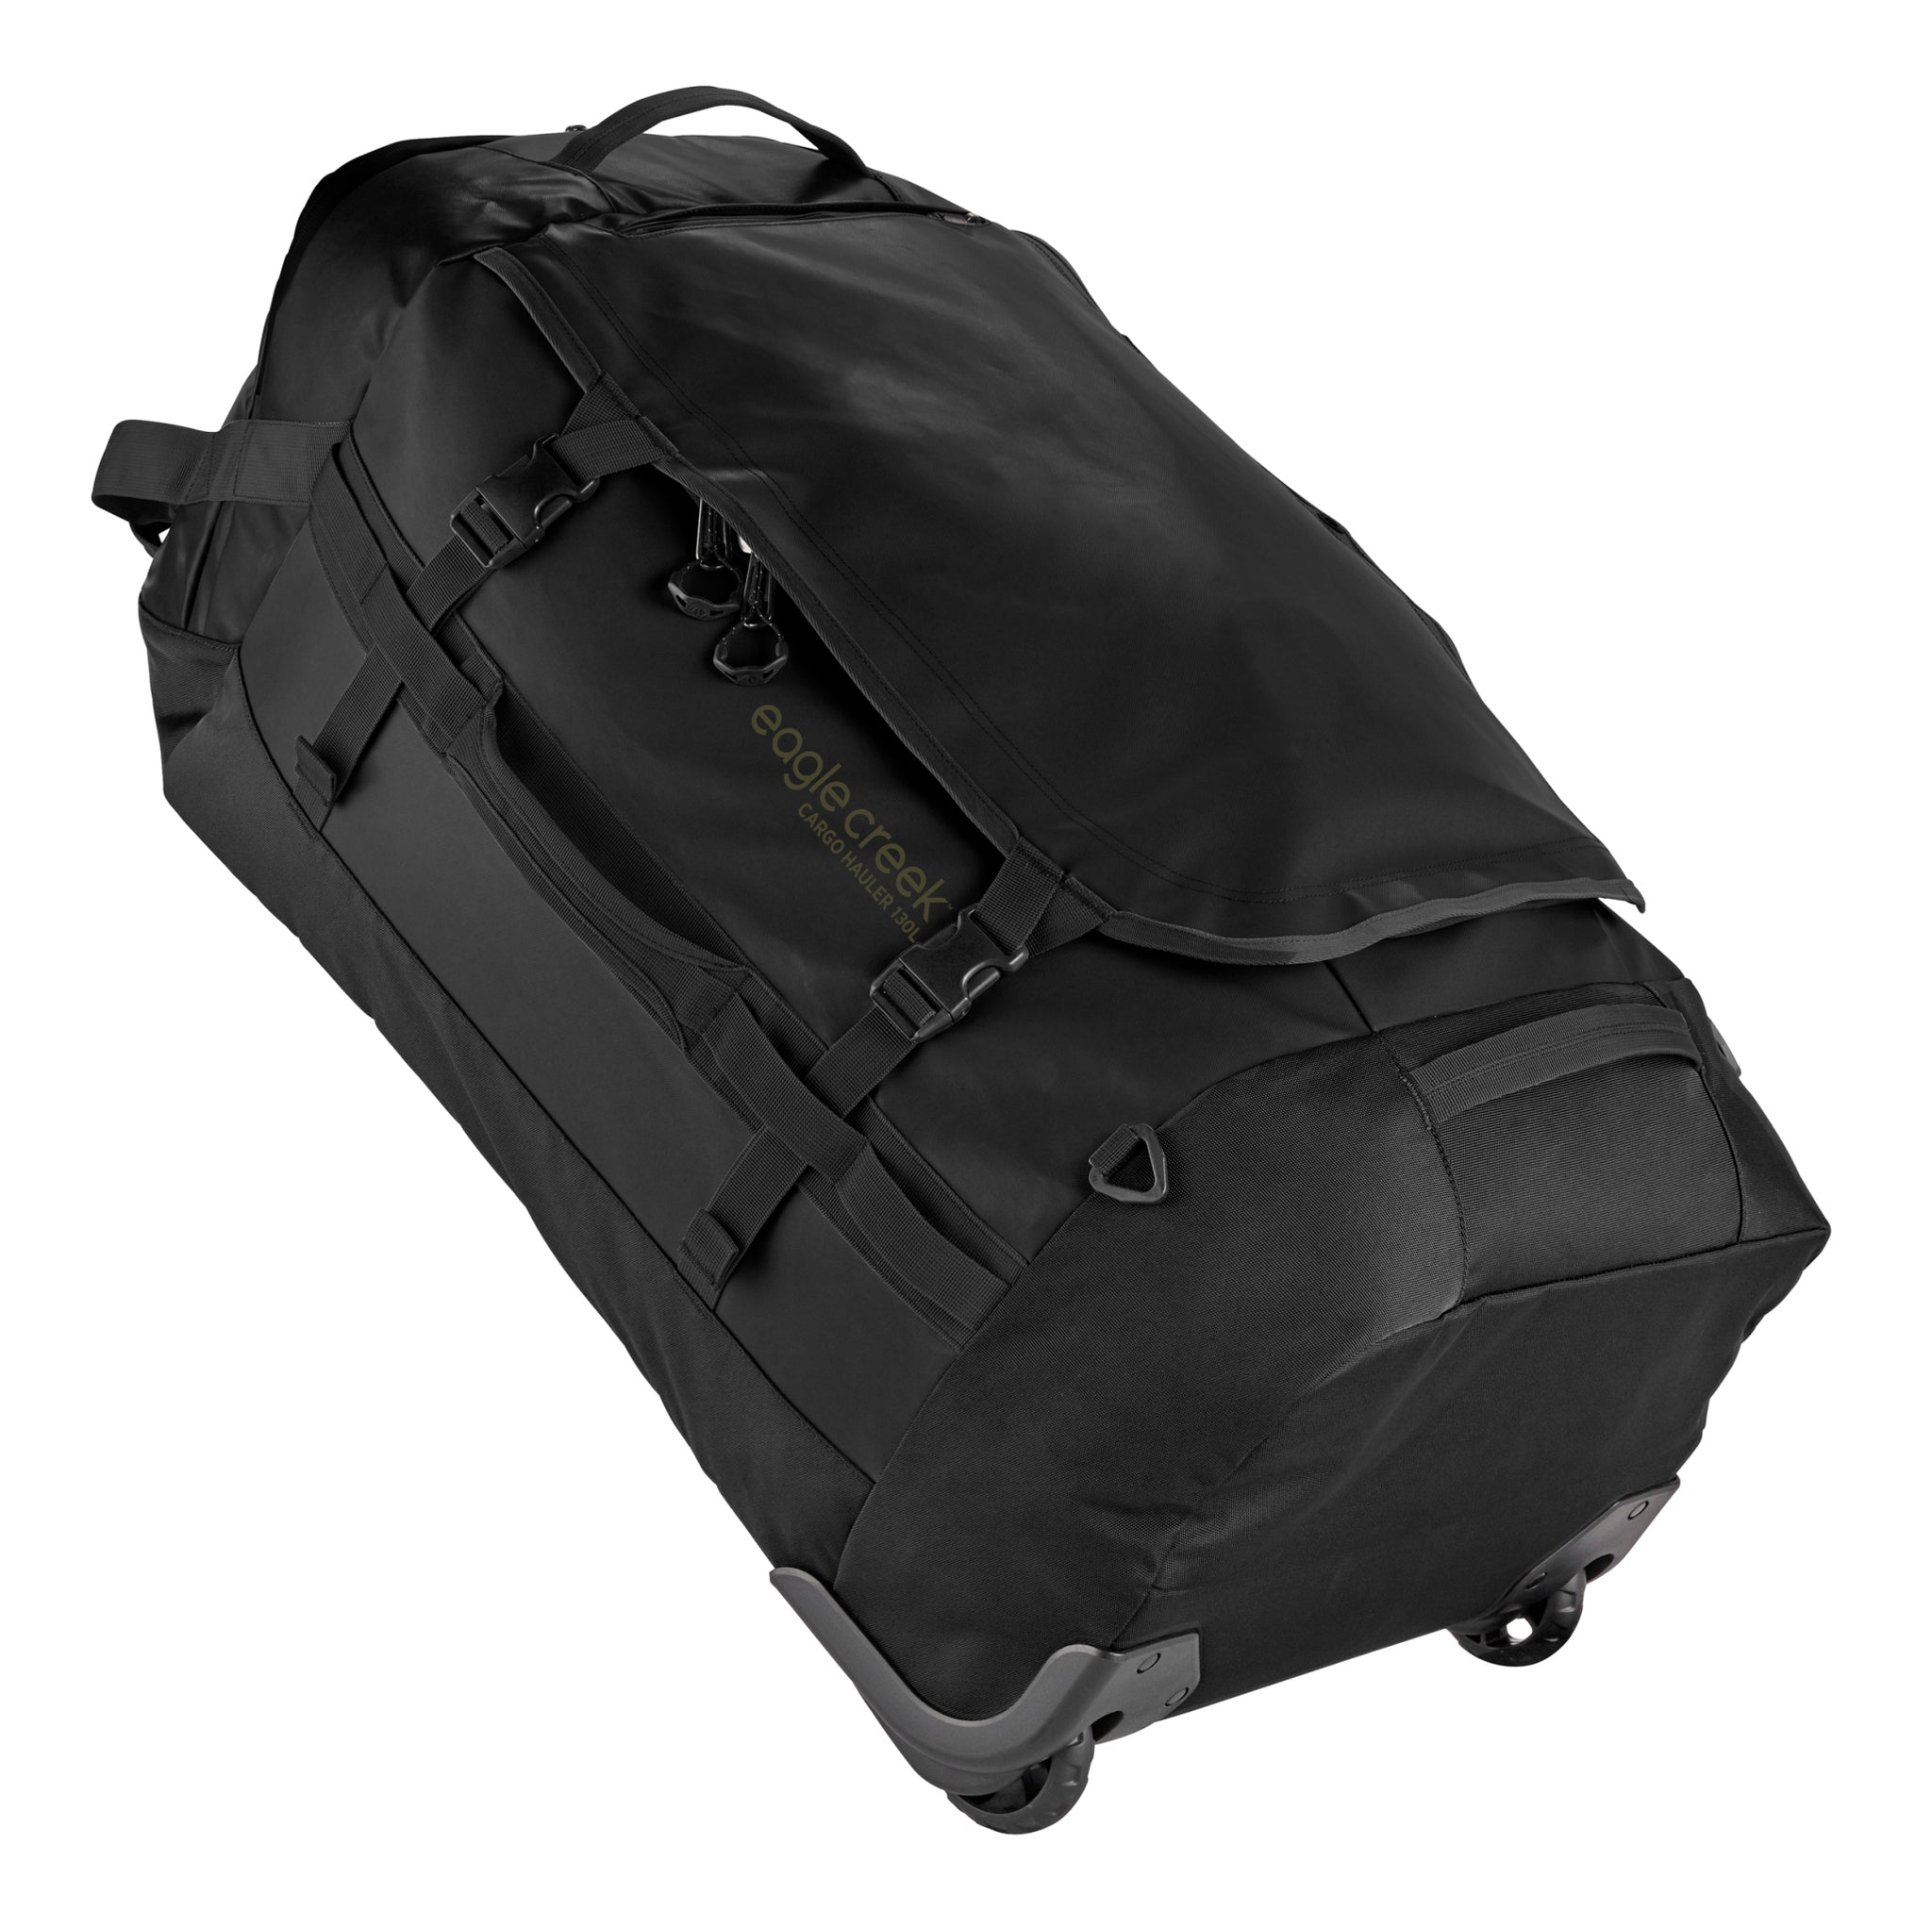 Shop Travel Backpacks: Wheeled Bags & Duffels